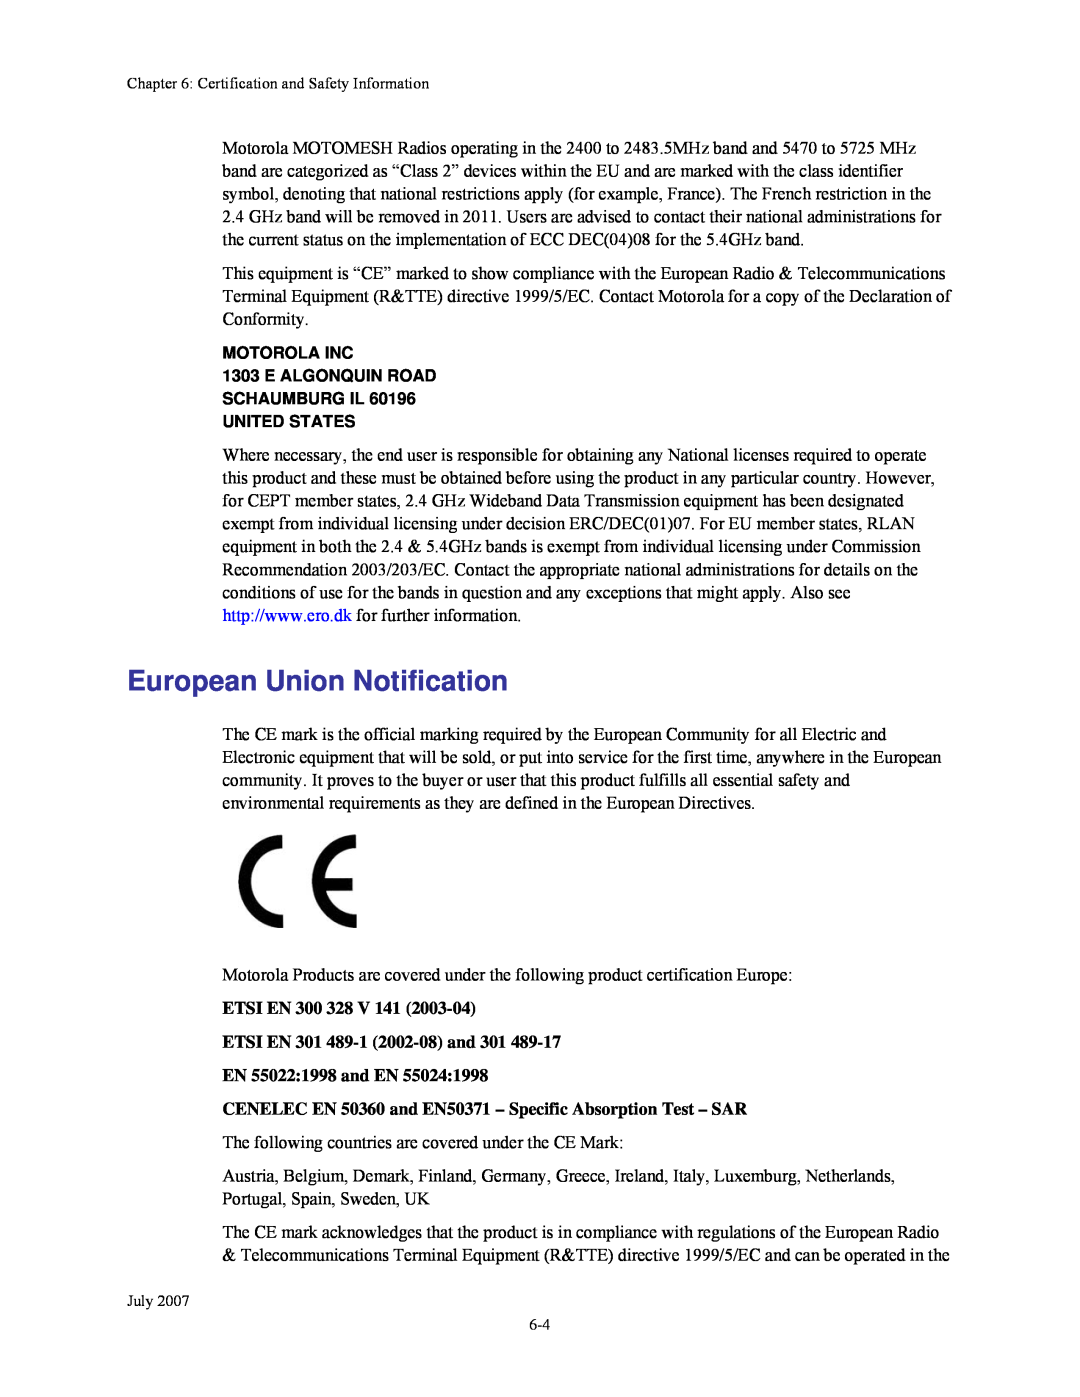 Nikon 4300 manual European Union Notification, MOTOROLA INC 1303 E ALGONQUIN ROAD SCHAUMBURG IL 60196 UNITED STATES 